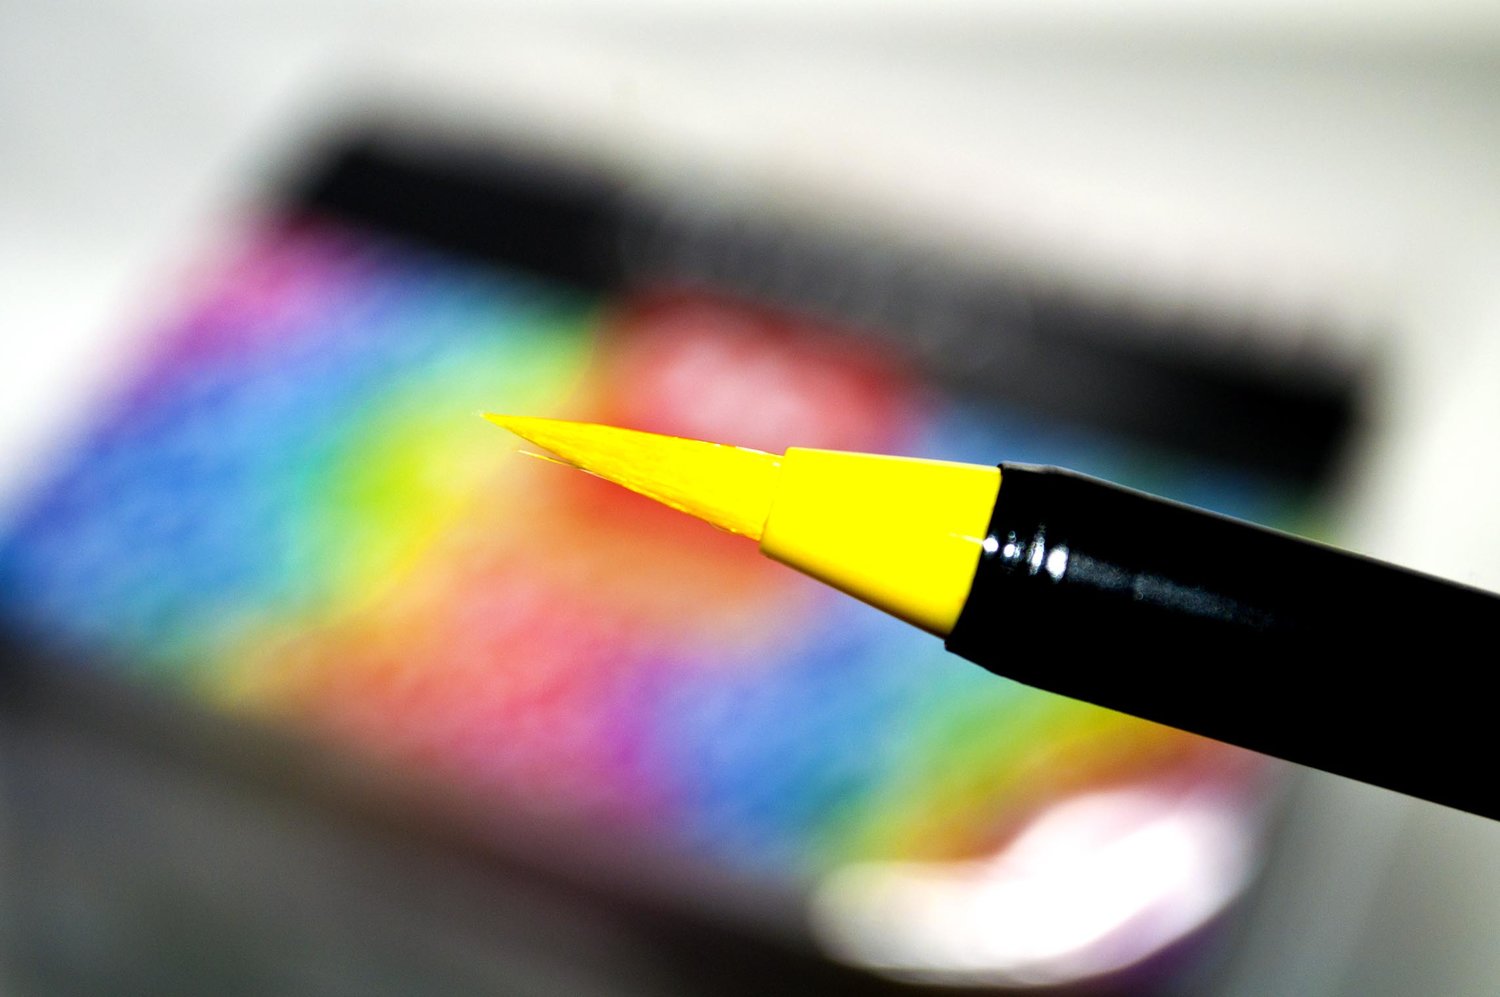 Arteza Blendable Ink Real Brush Tip Artist Brush Pens Set, Assorted Colors,  Non-Toxic - 24 Pack 